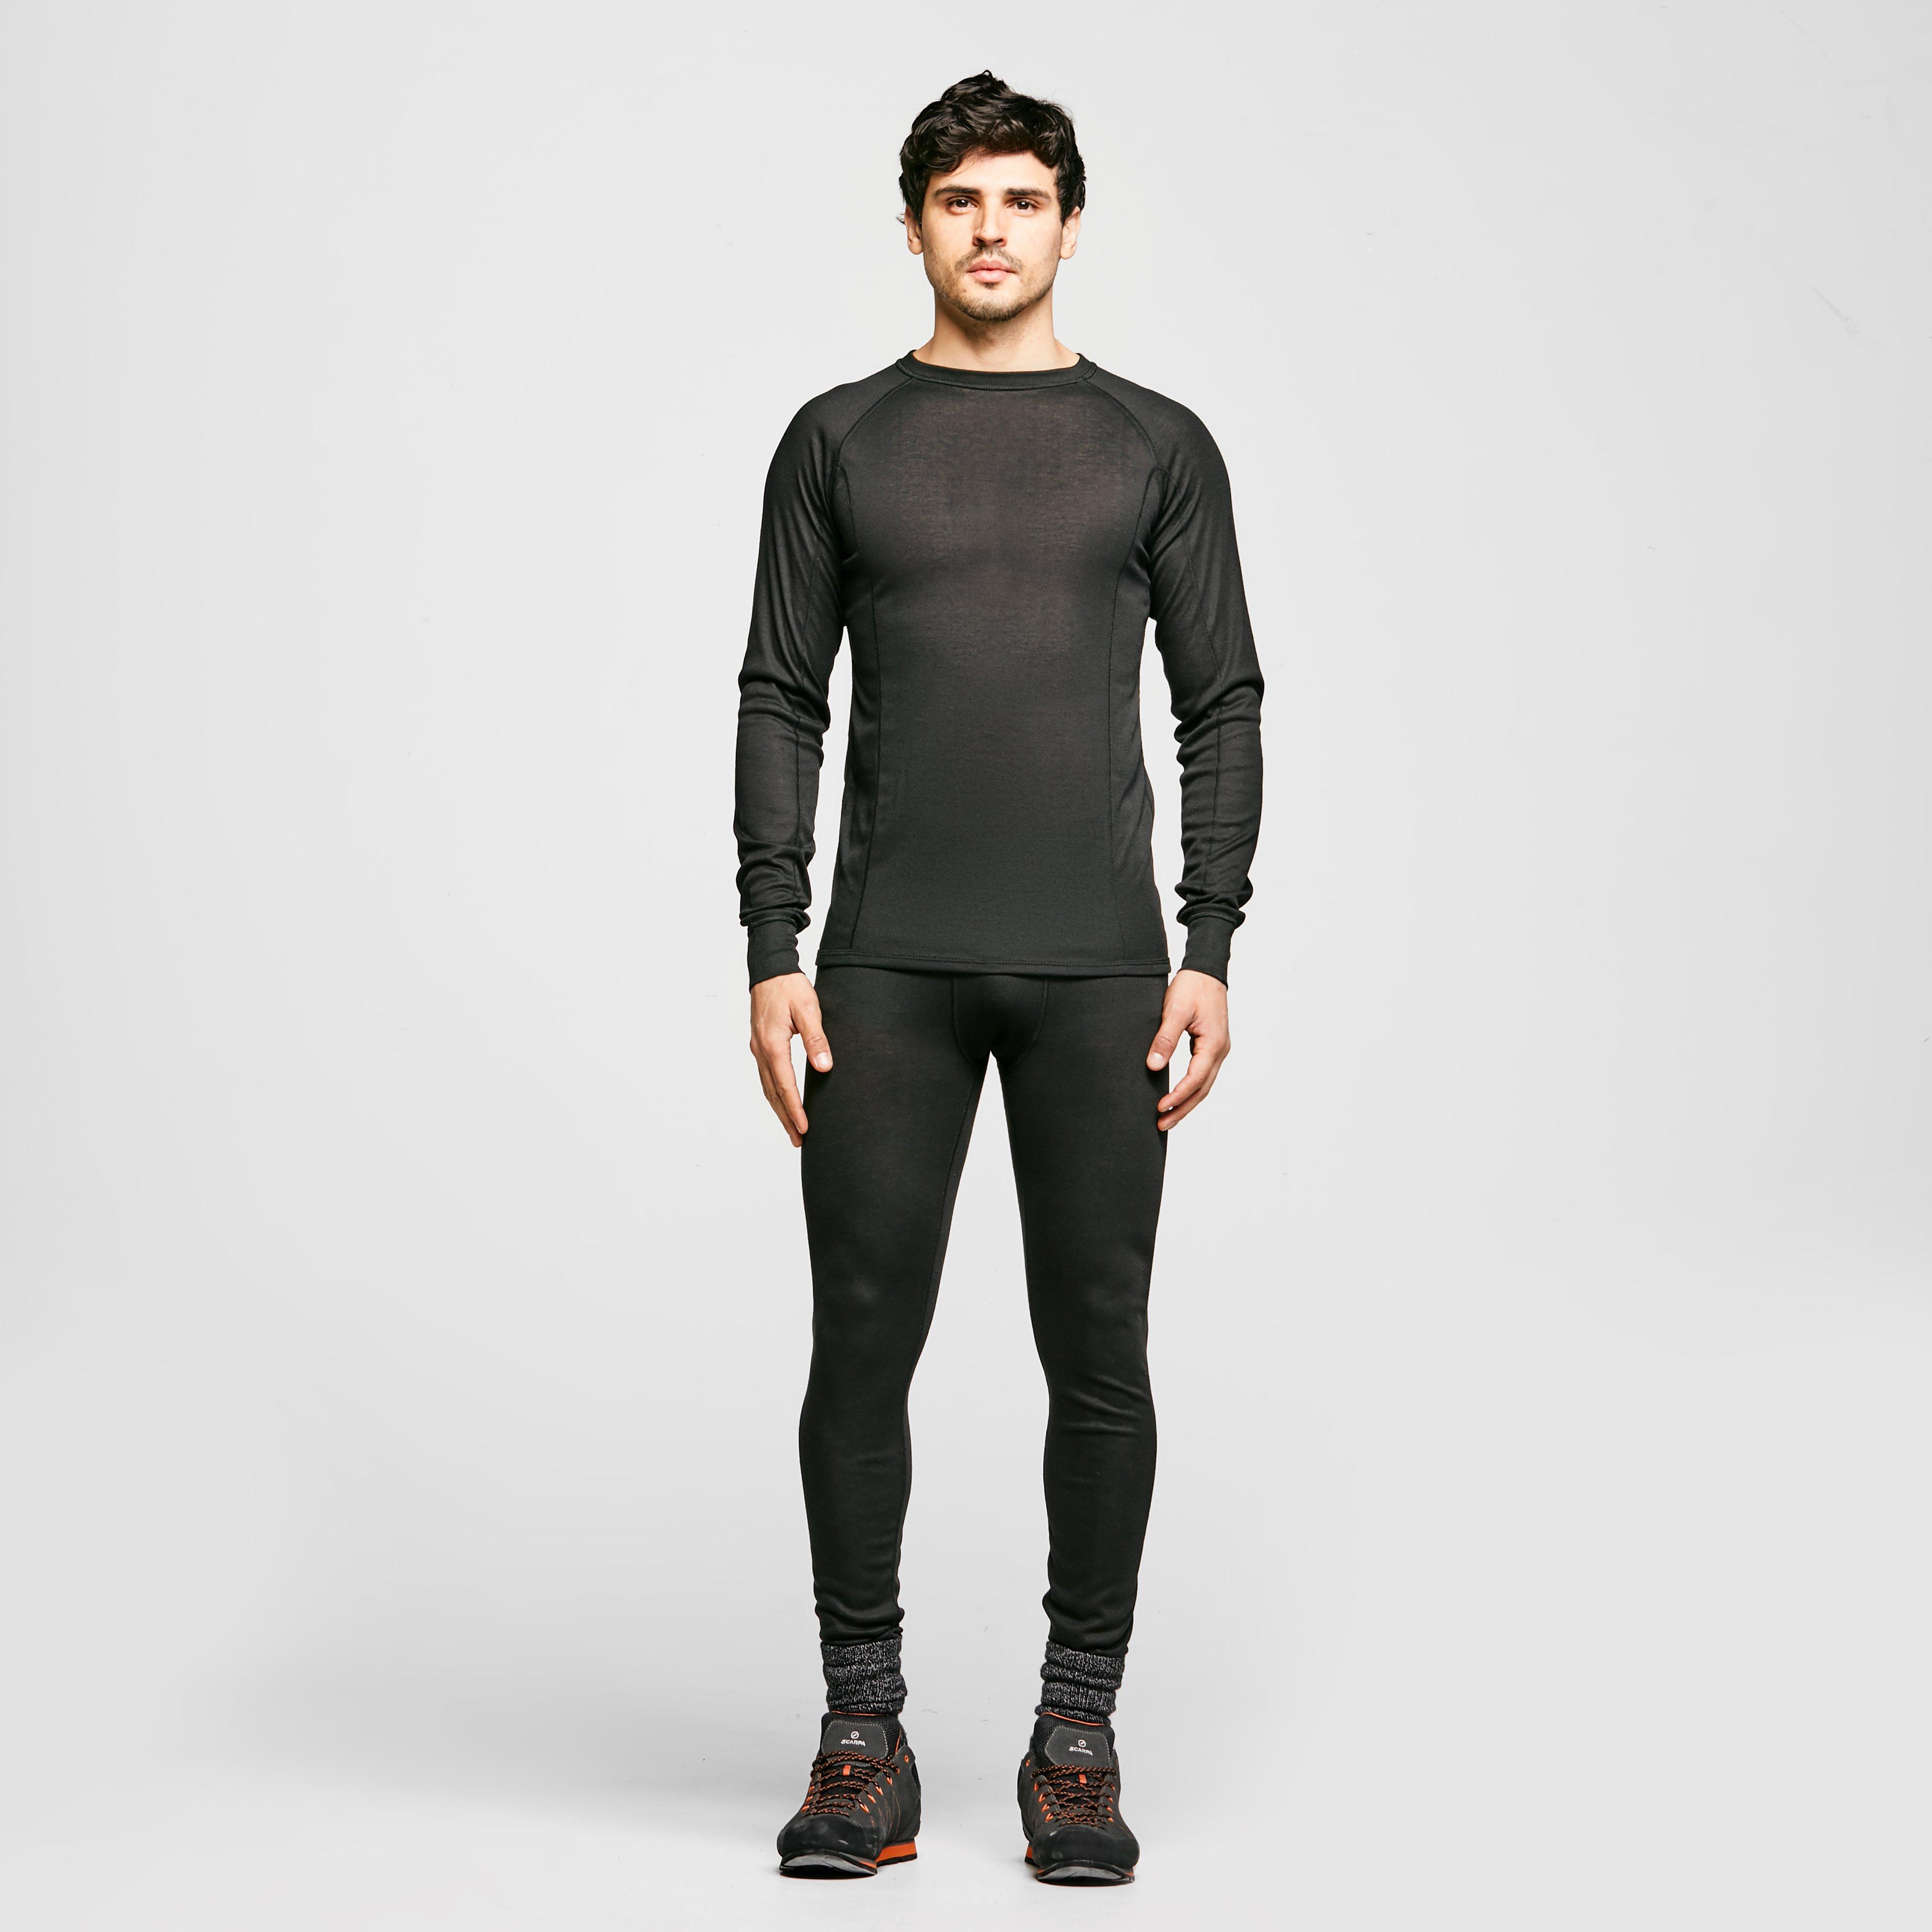 The Edge Mens Thermal Underwear Set - Black/blk  Black/blk